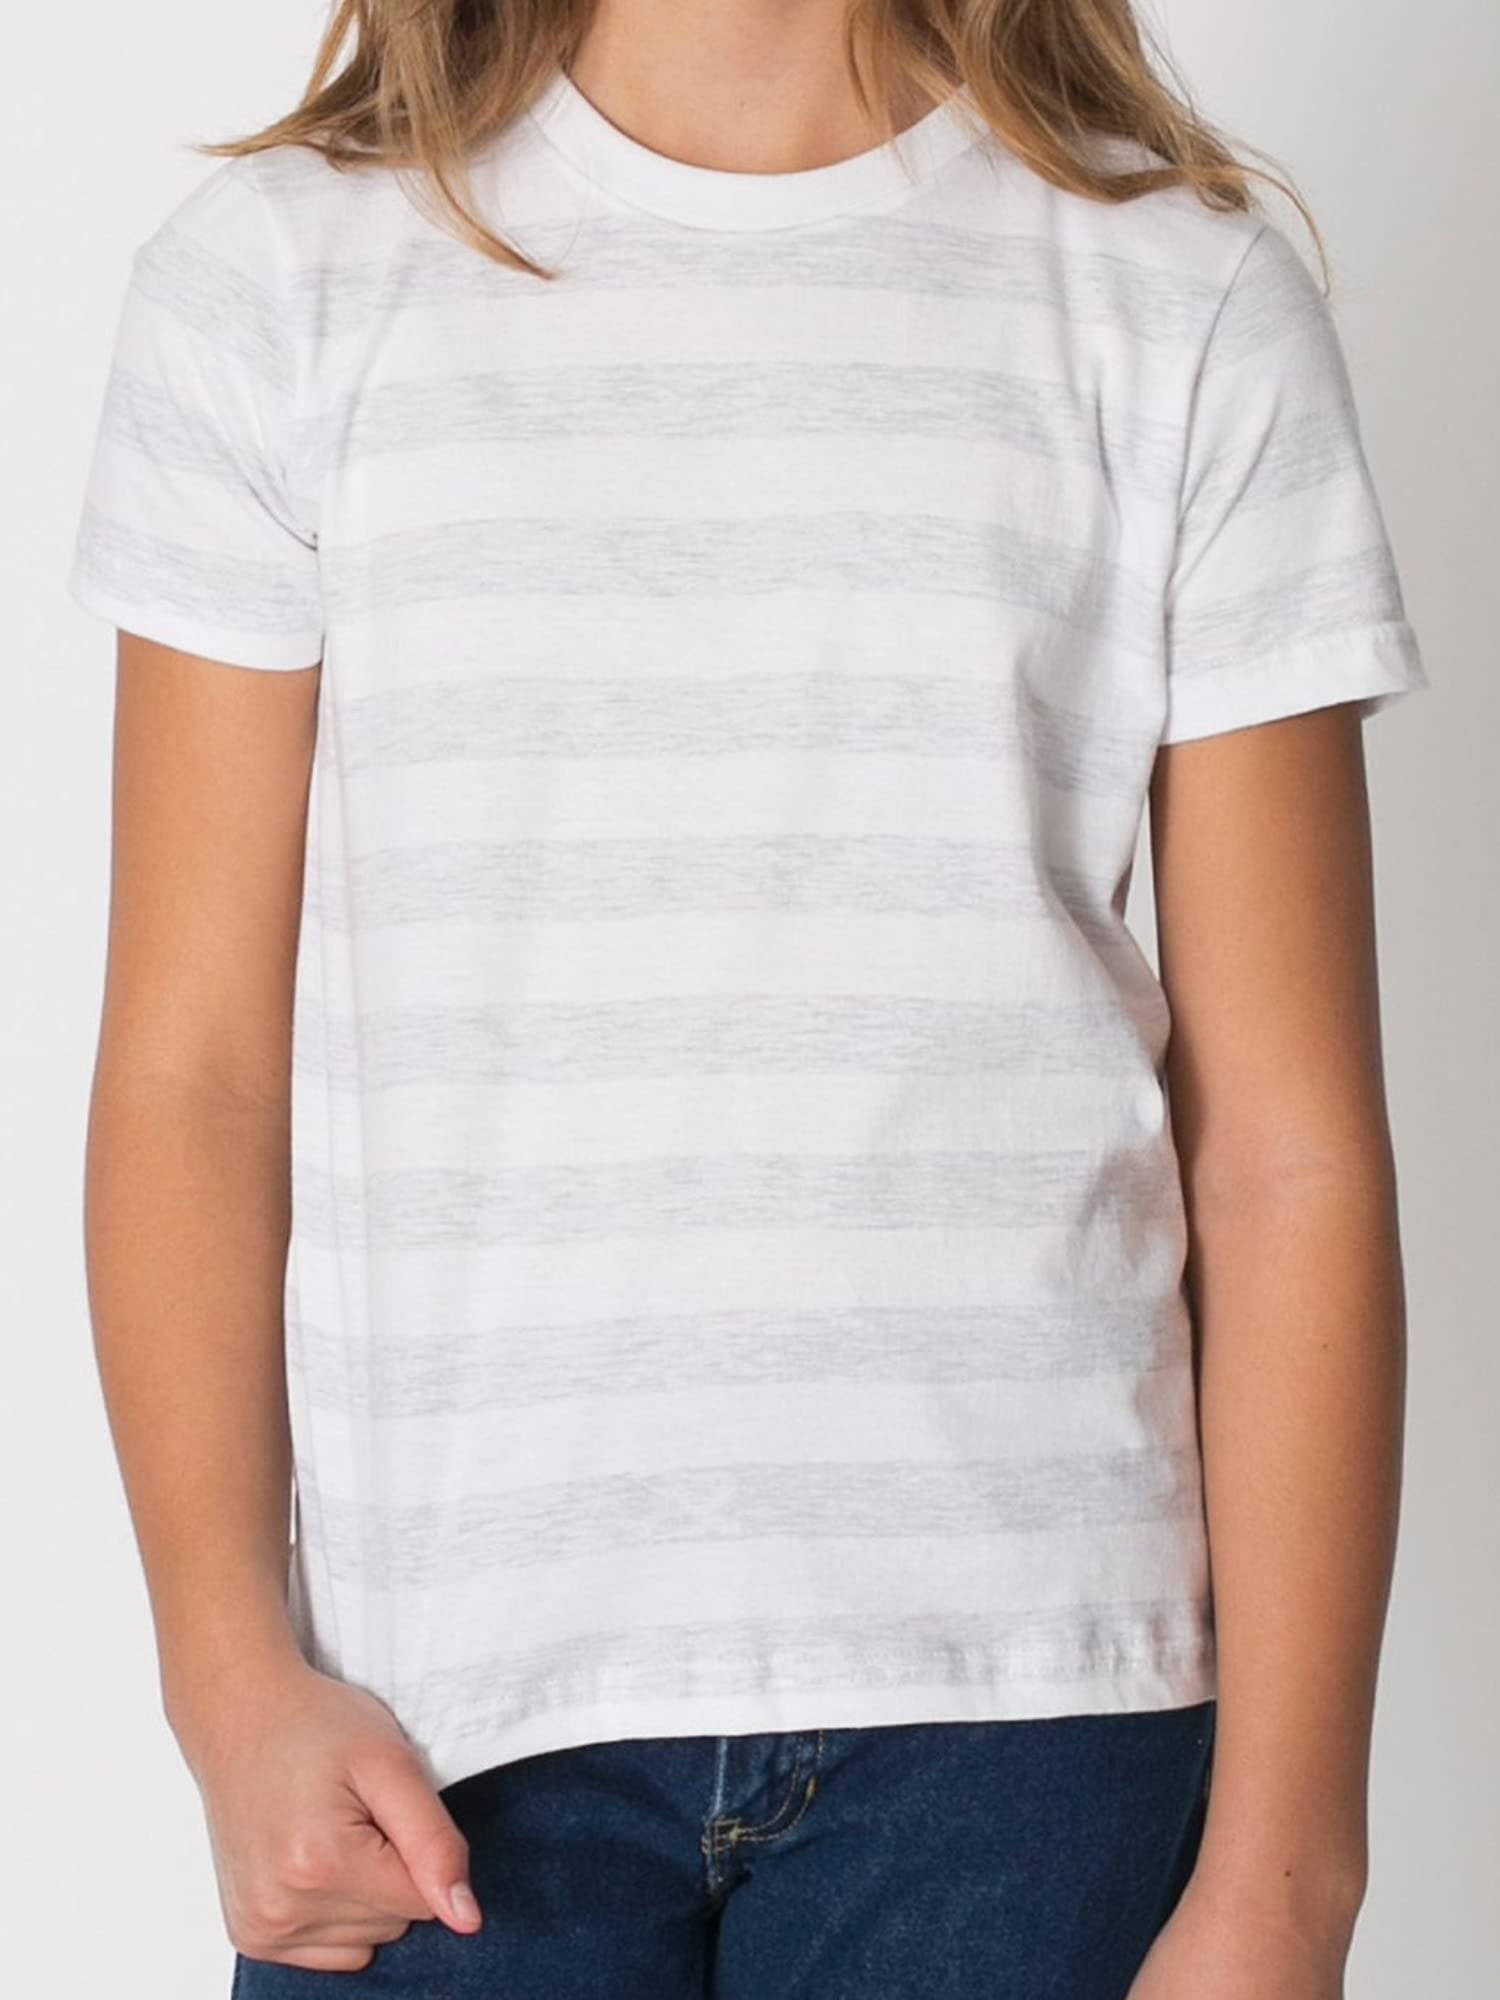 -WHITE 8 2201 American Apparel Boys Fine Jersey Short-Sleeve T-Shirt